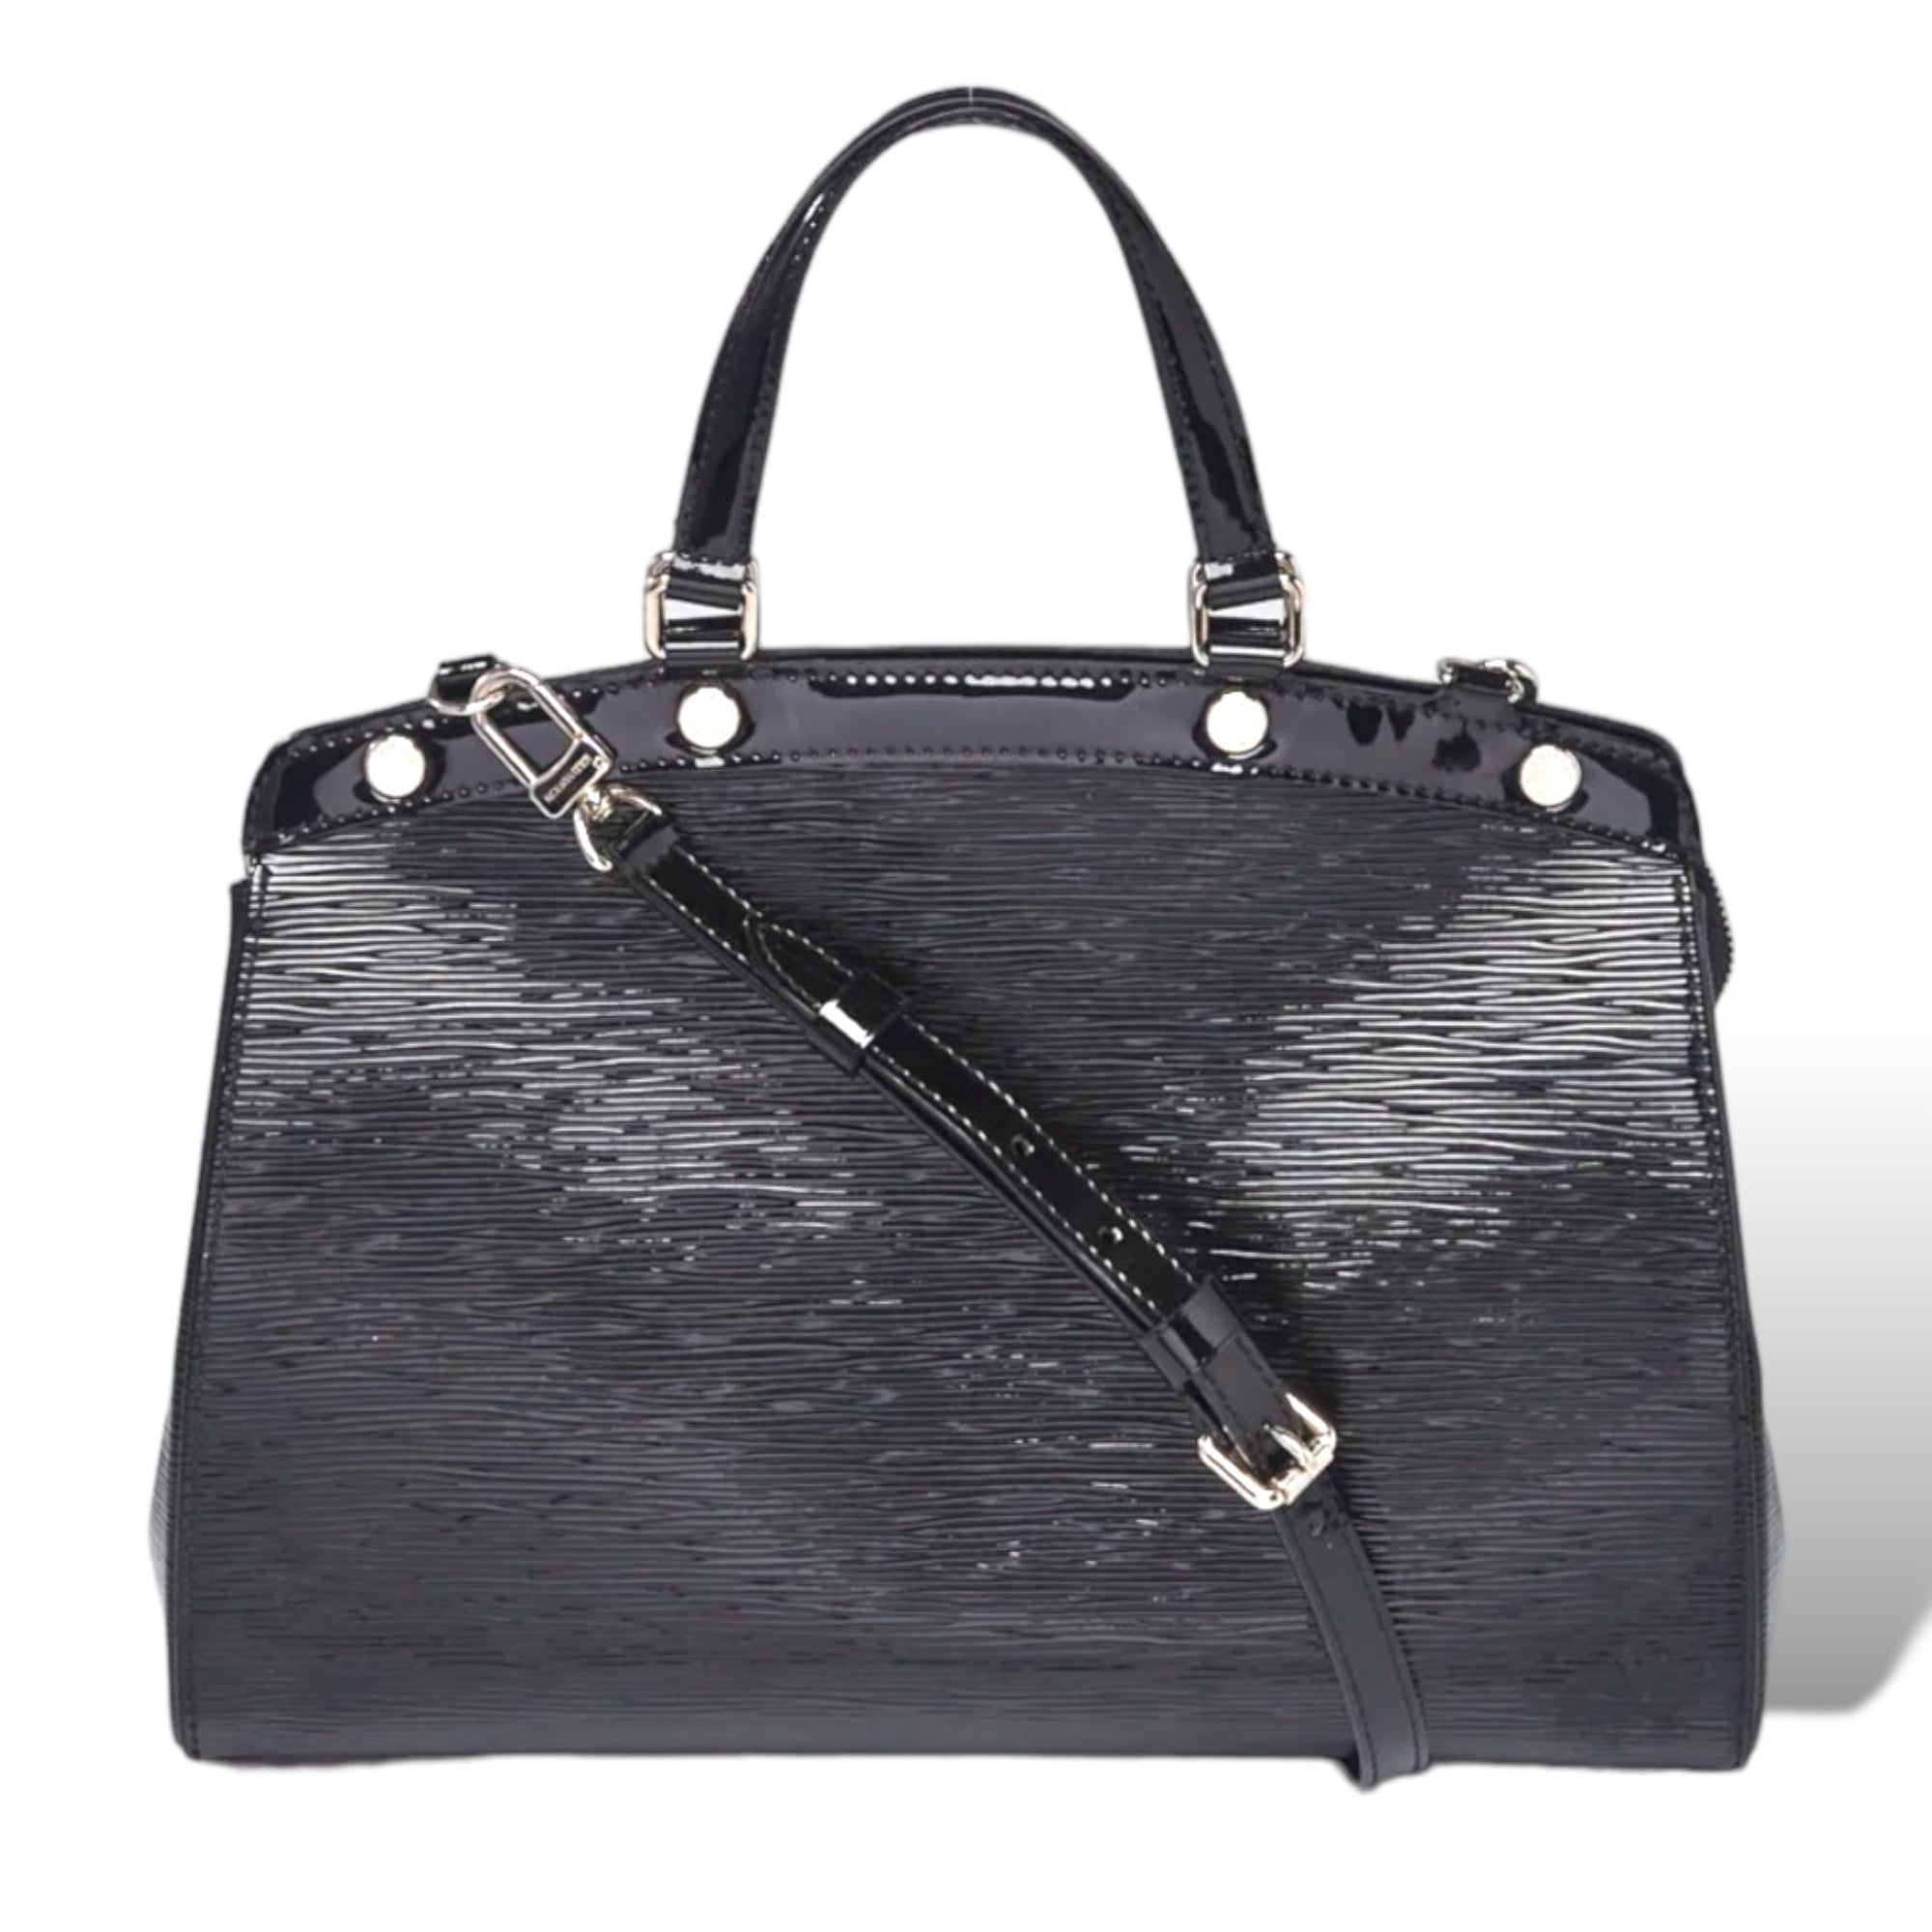 Louis Vuitton Brea mm Bag Black EPI Leather Tote